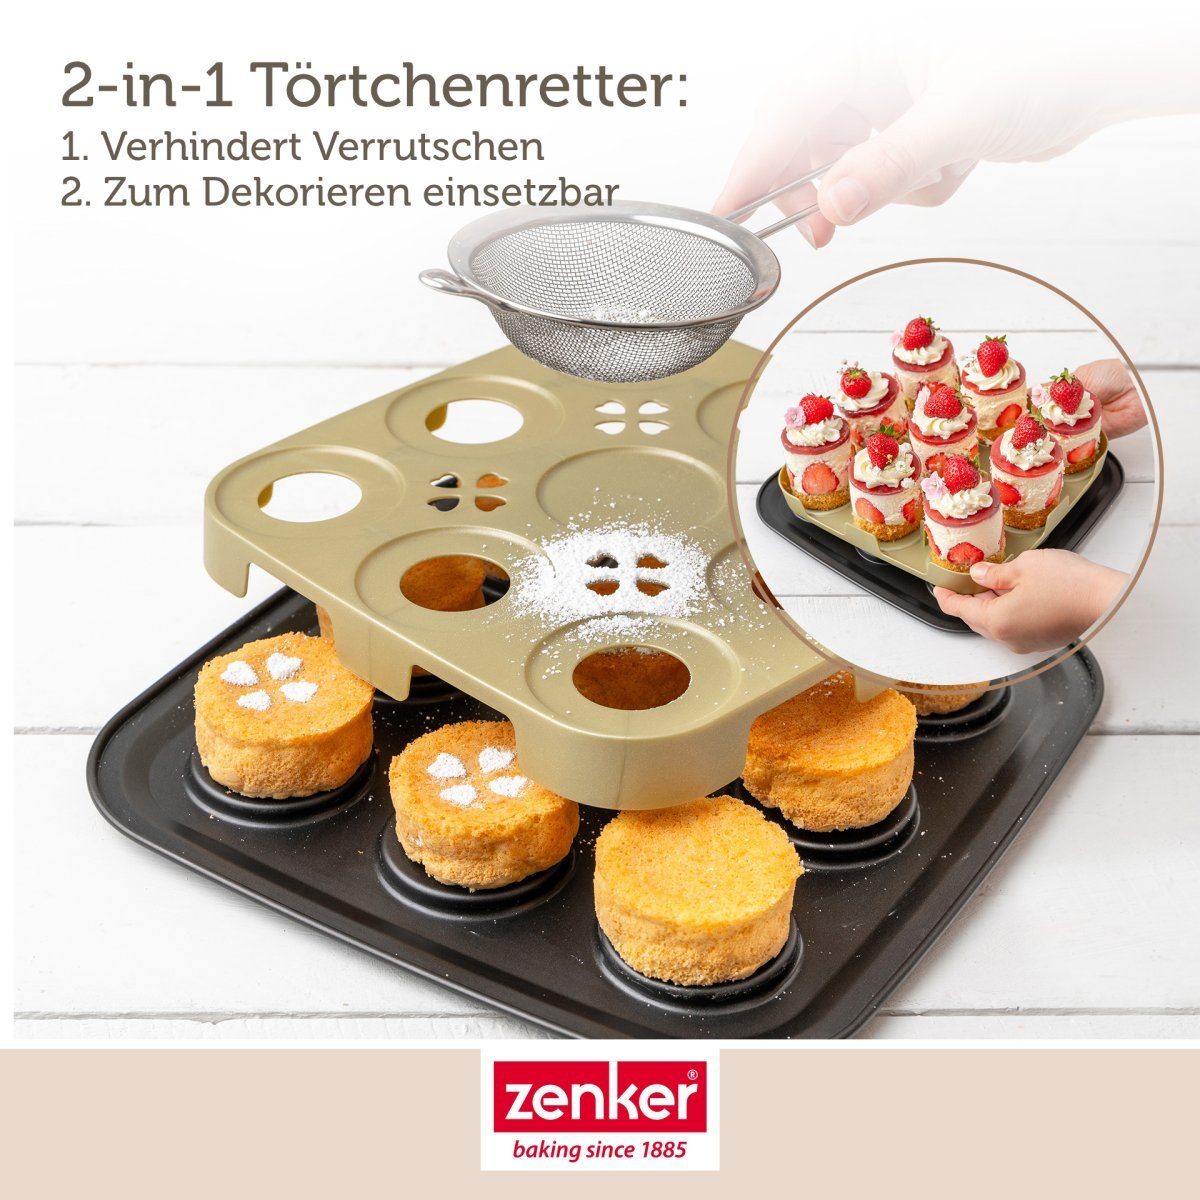 Go Backblech Click Zenker Bake, &